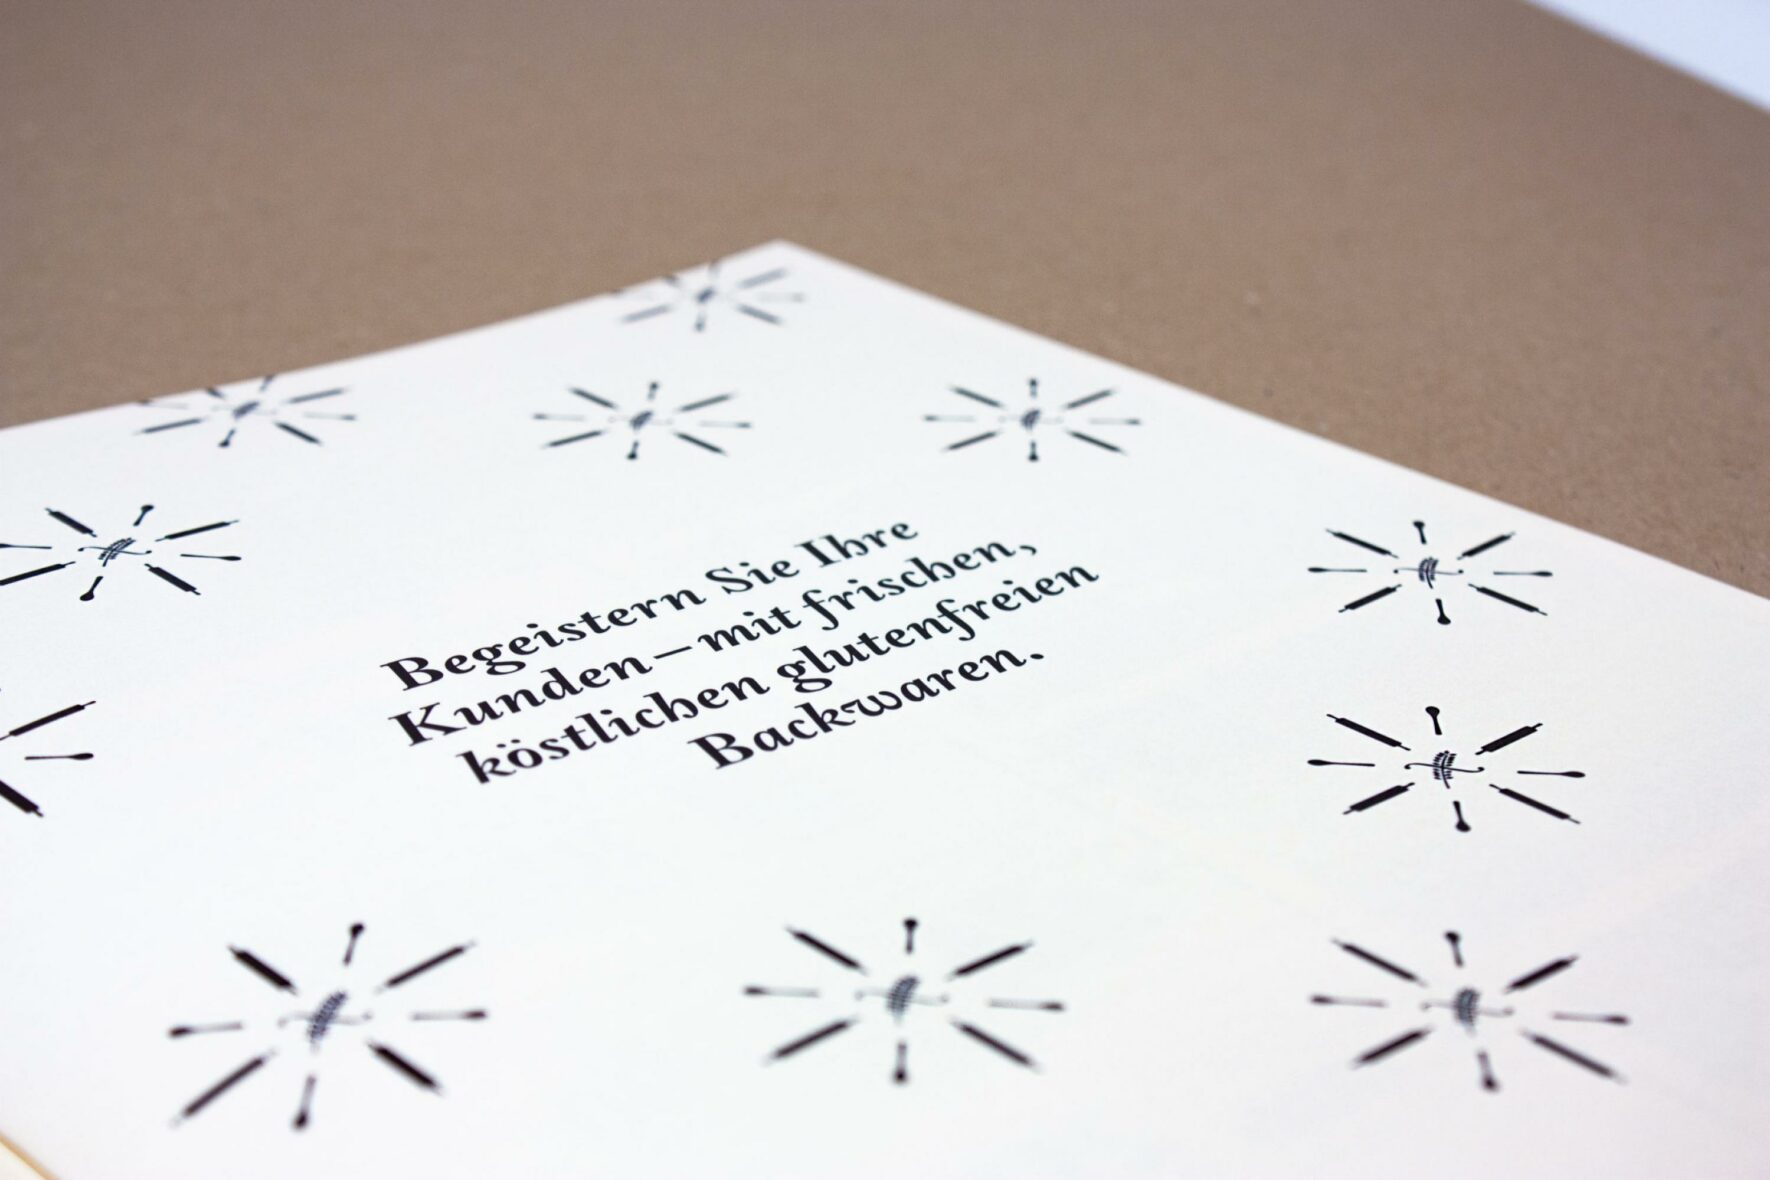 Print-broschuere-jute-baeckerei-formlos-corporate-design-7